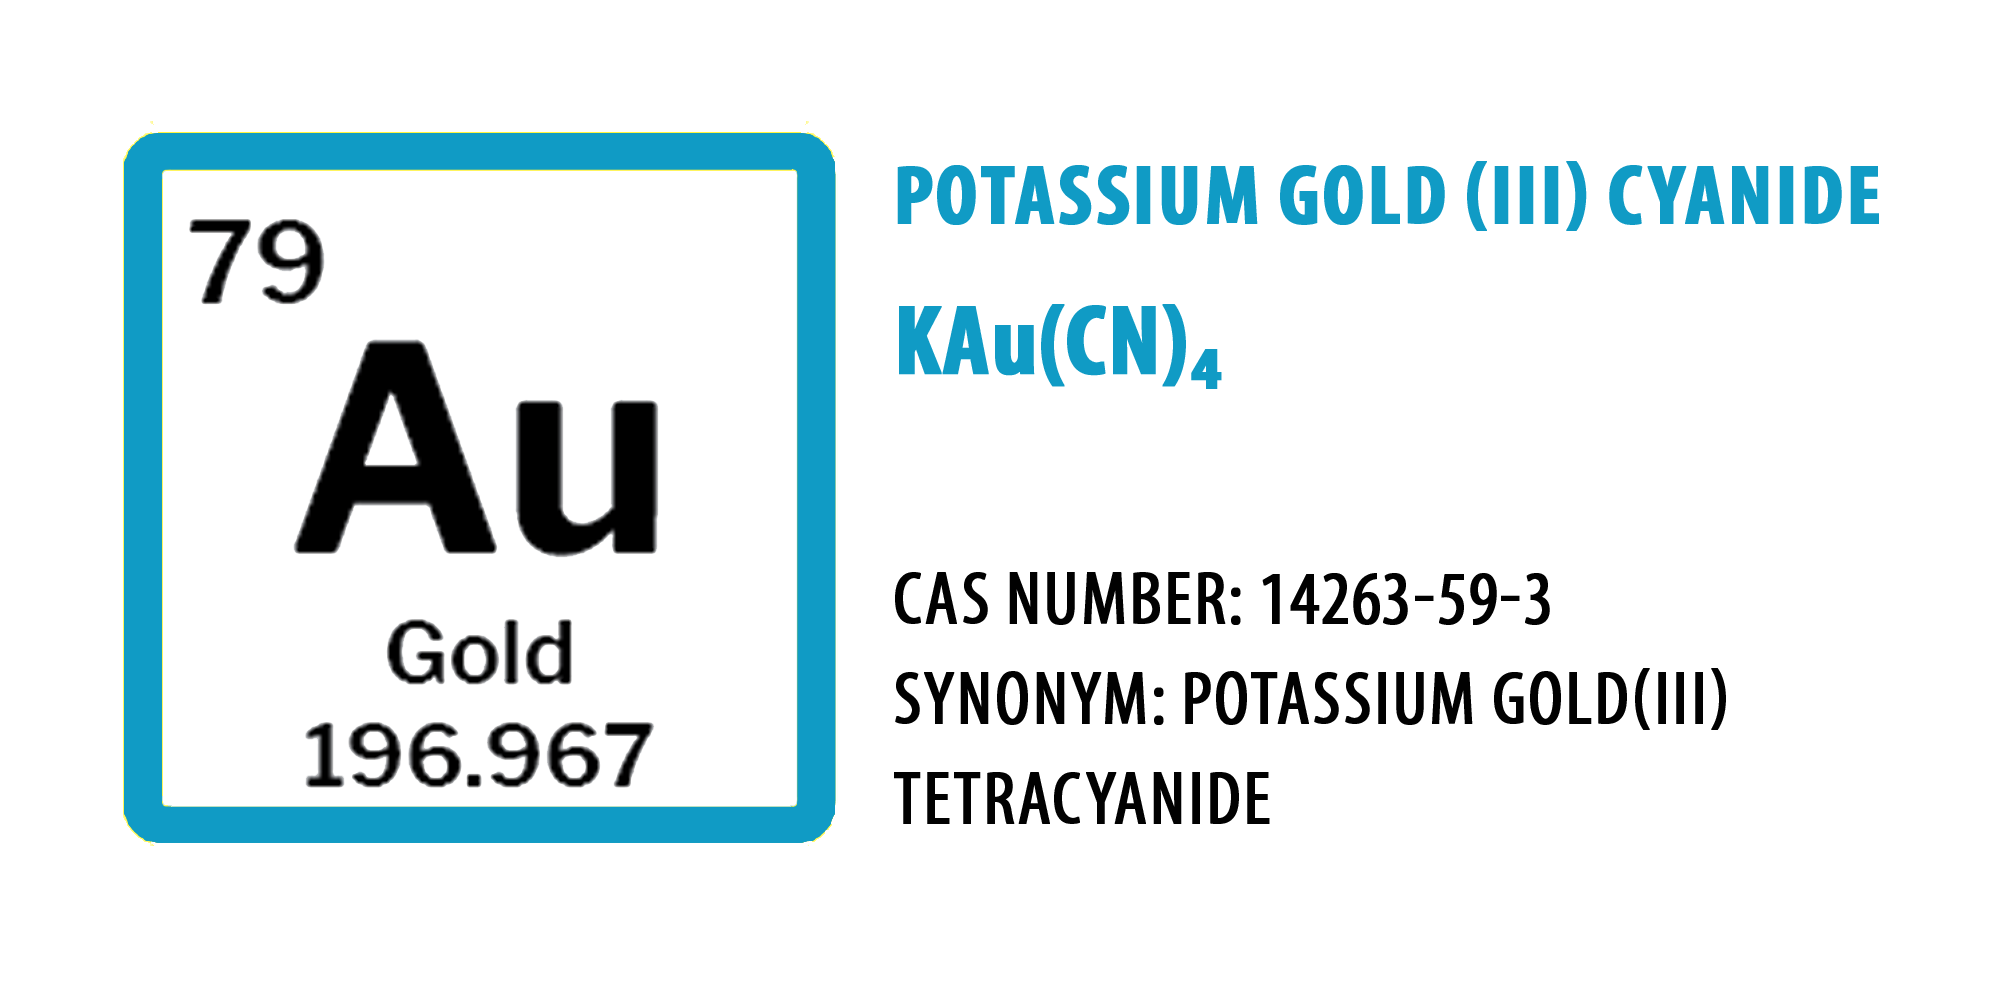 POTASSIUM GOLD(III)